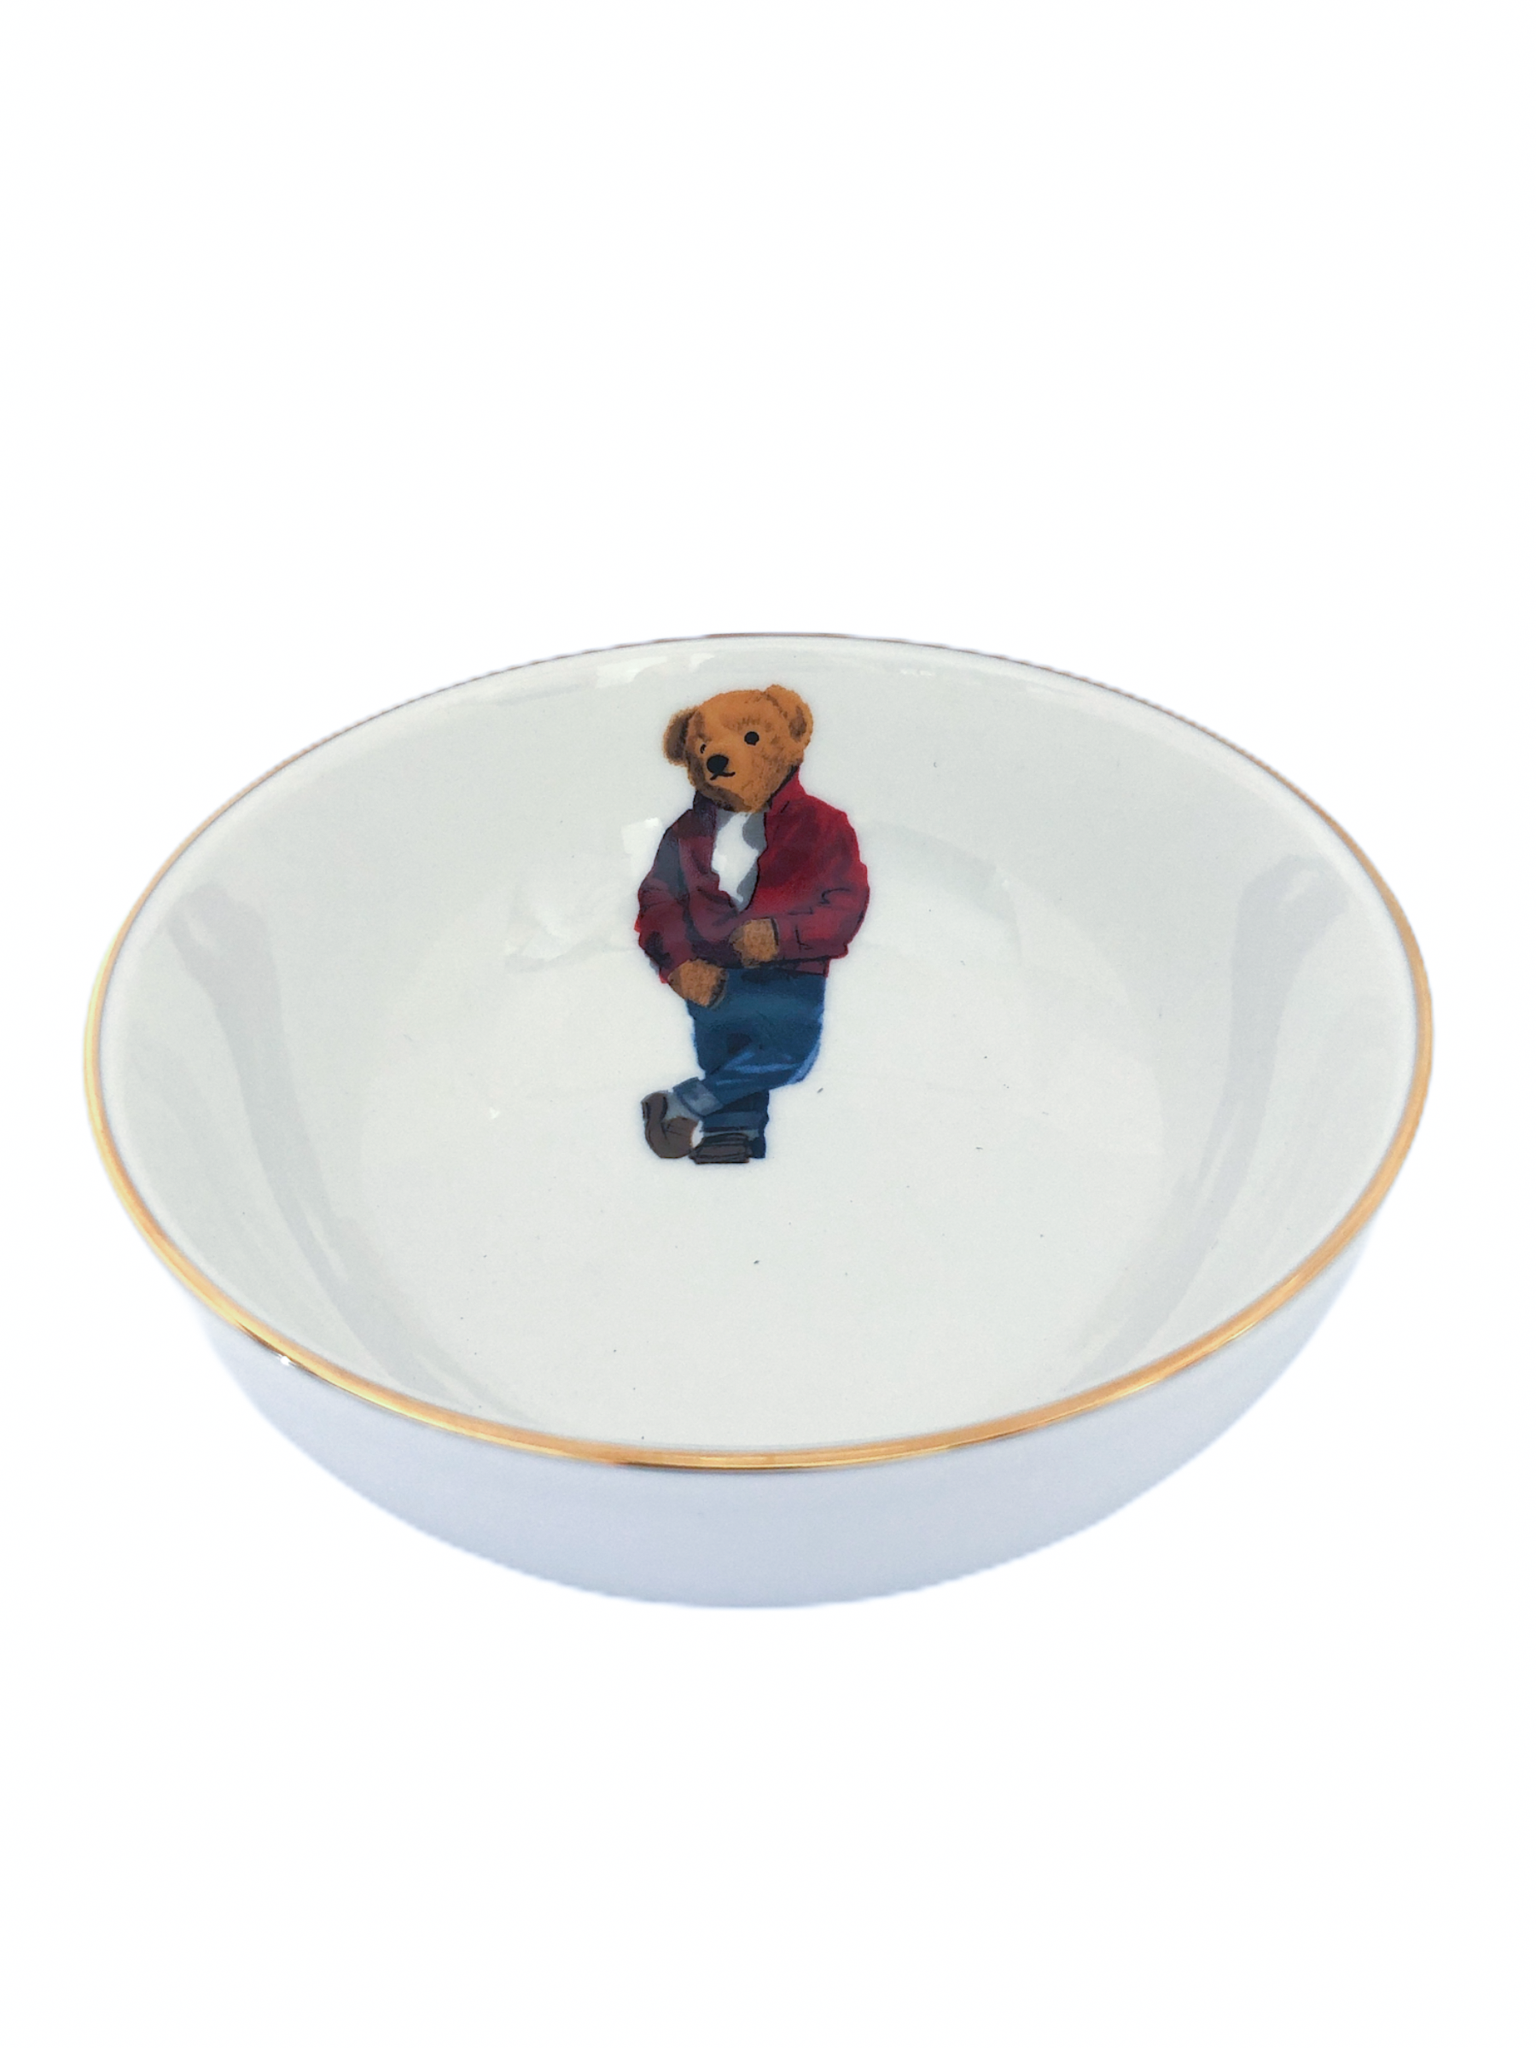 Teddy Bear in Red Jacket Porcelain Bowl White